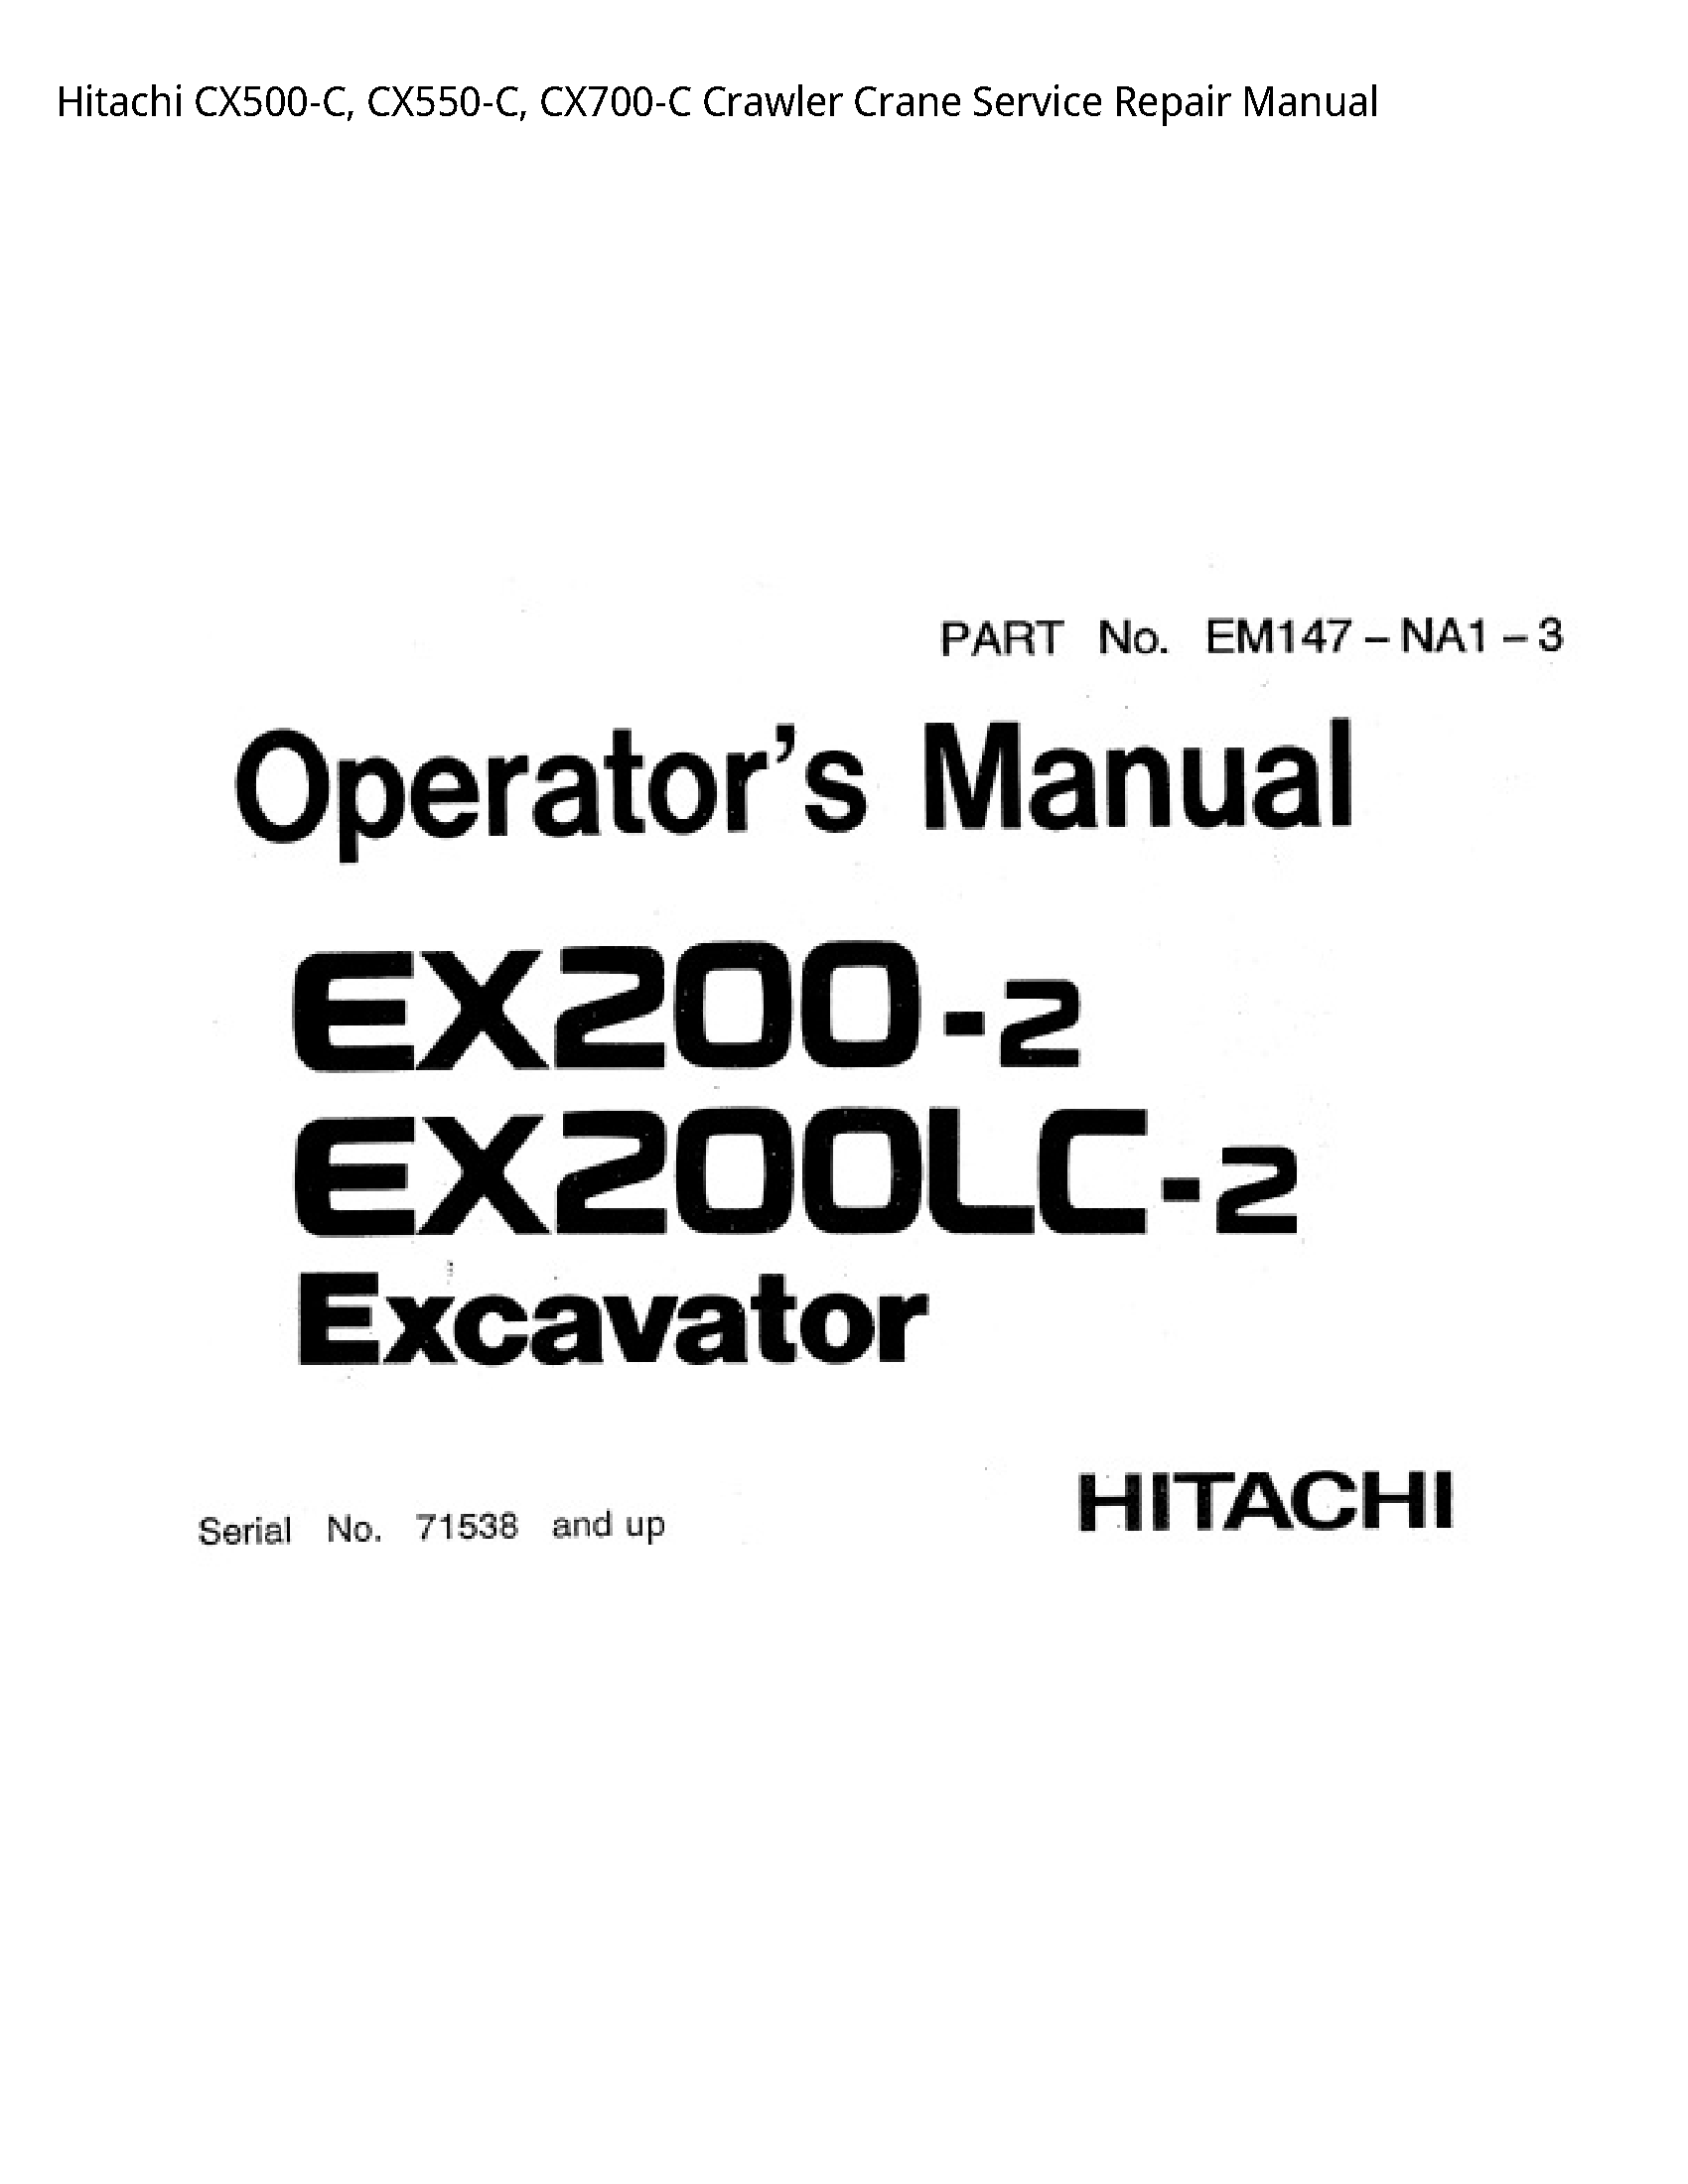 Hitachi CX500-C Crawler Crane manual